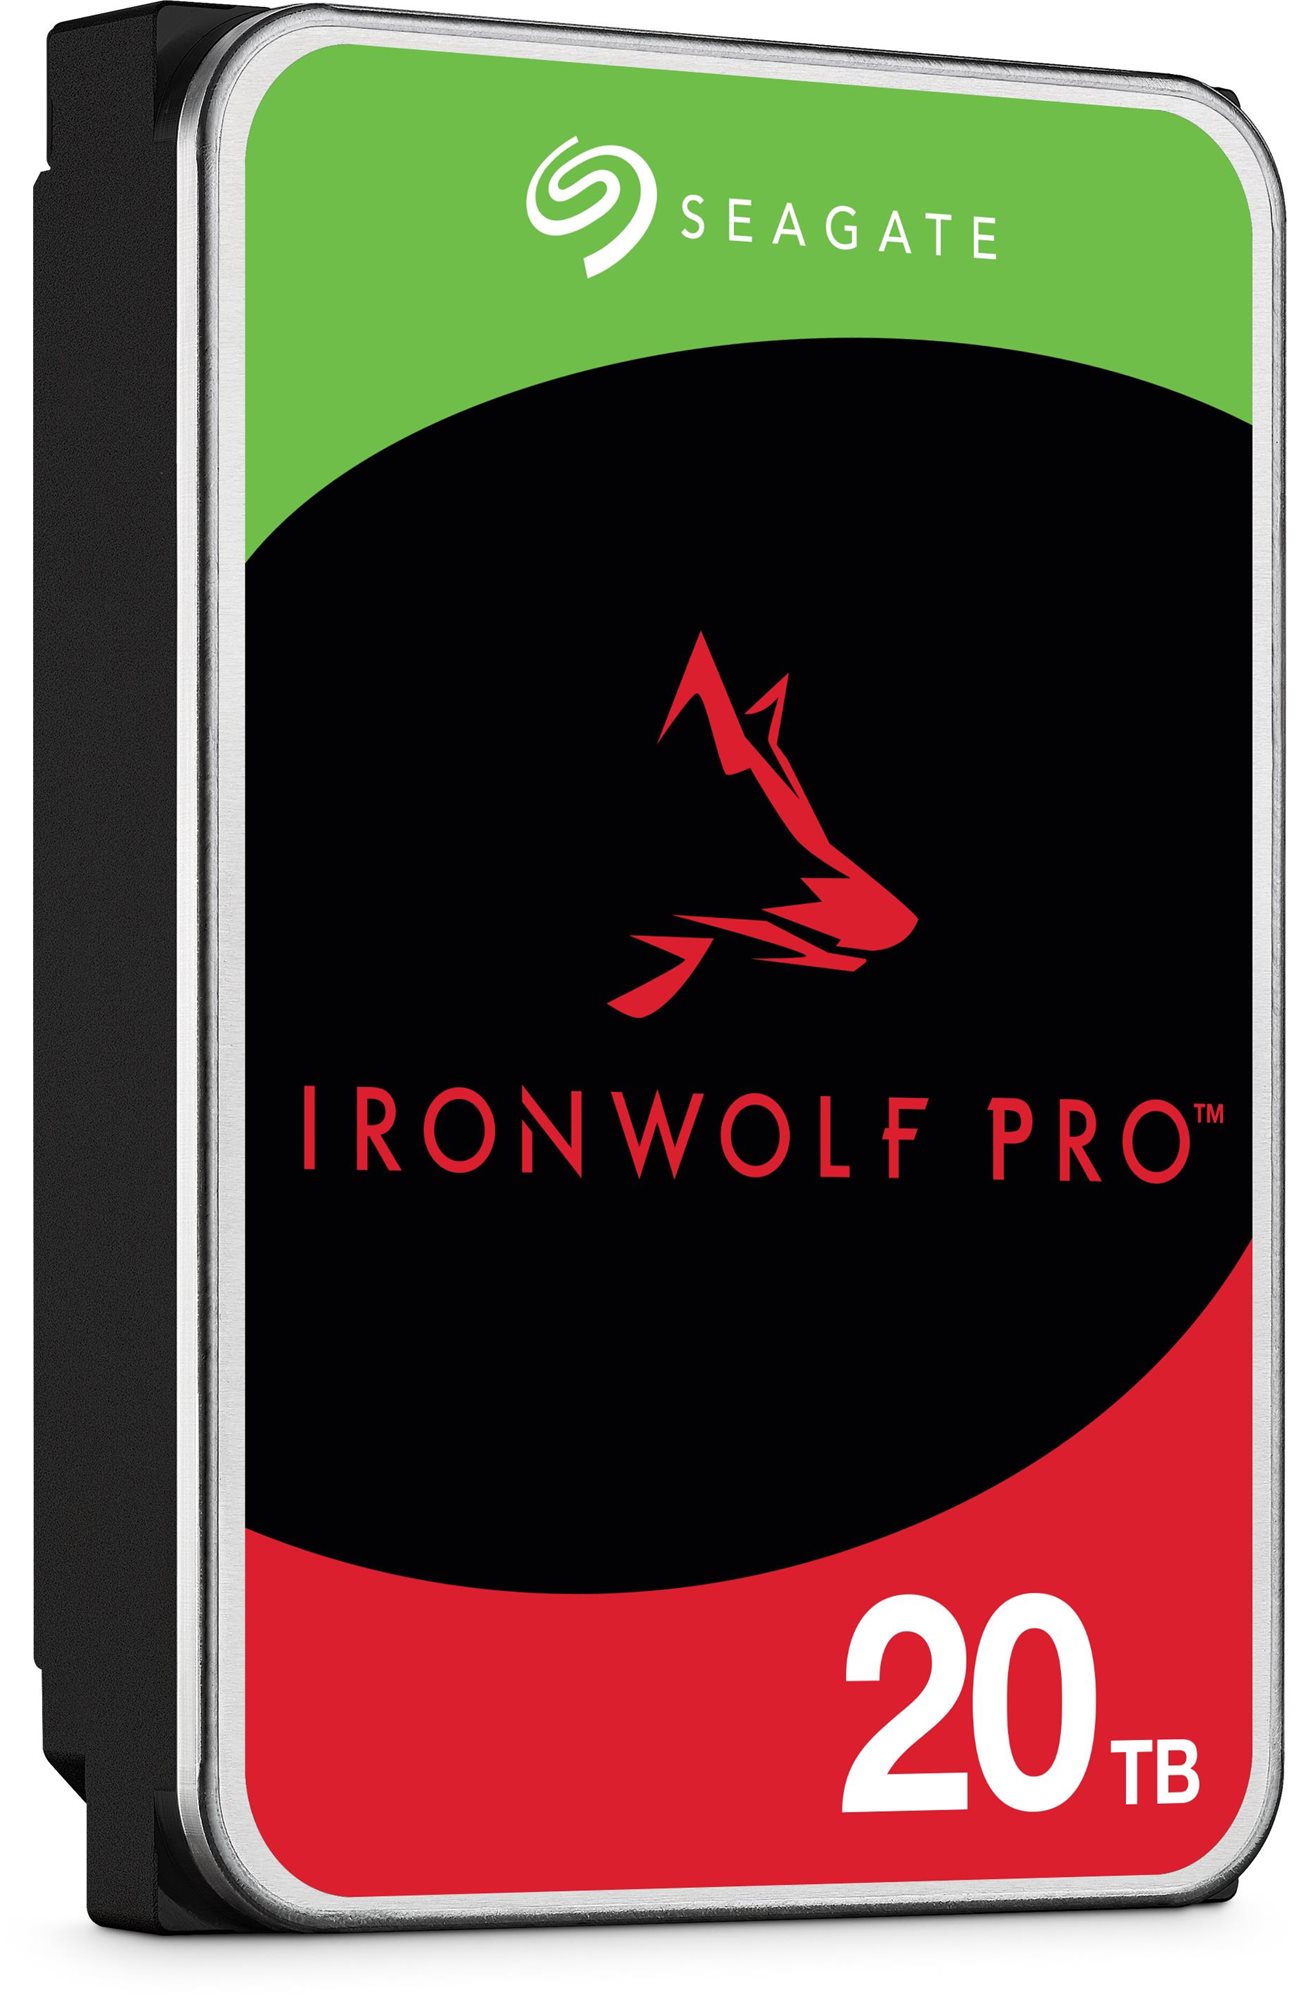 Seagate ironwolf pro 20 tb cmr